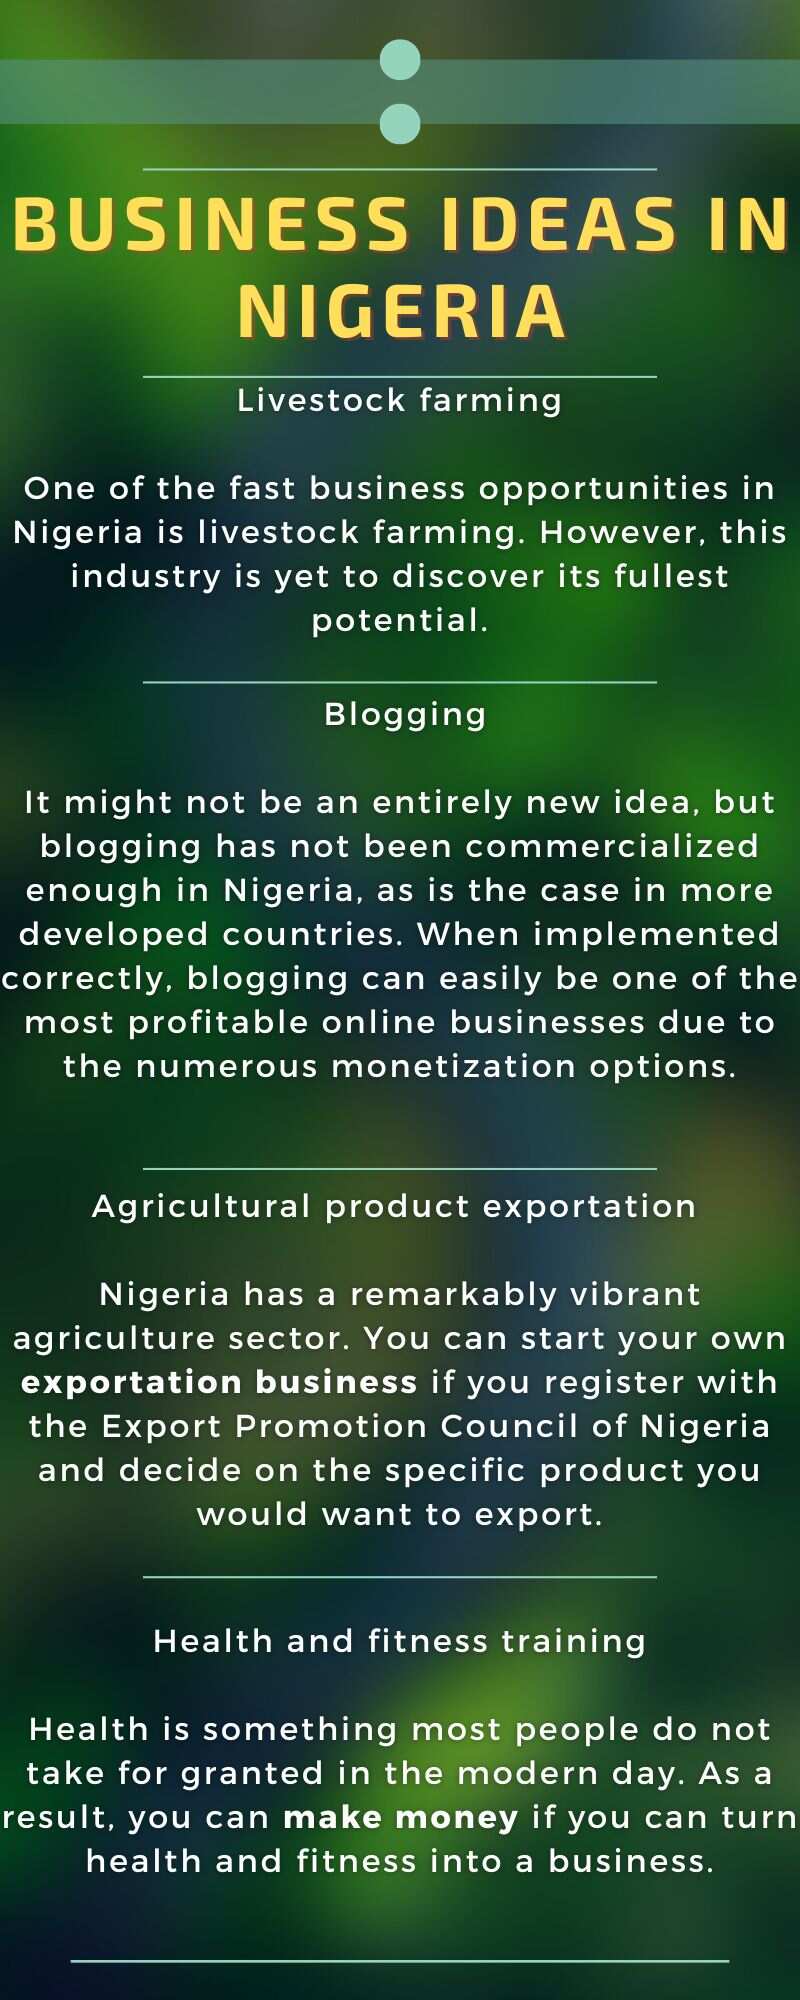 Business ideas in Nigeria